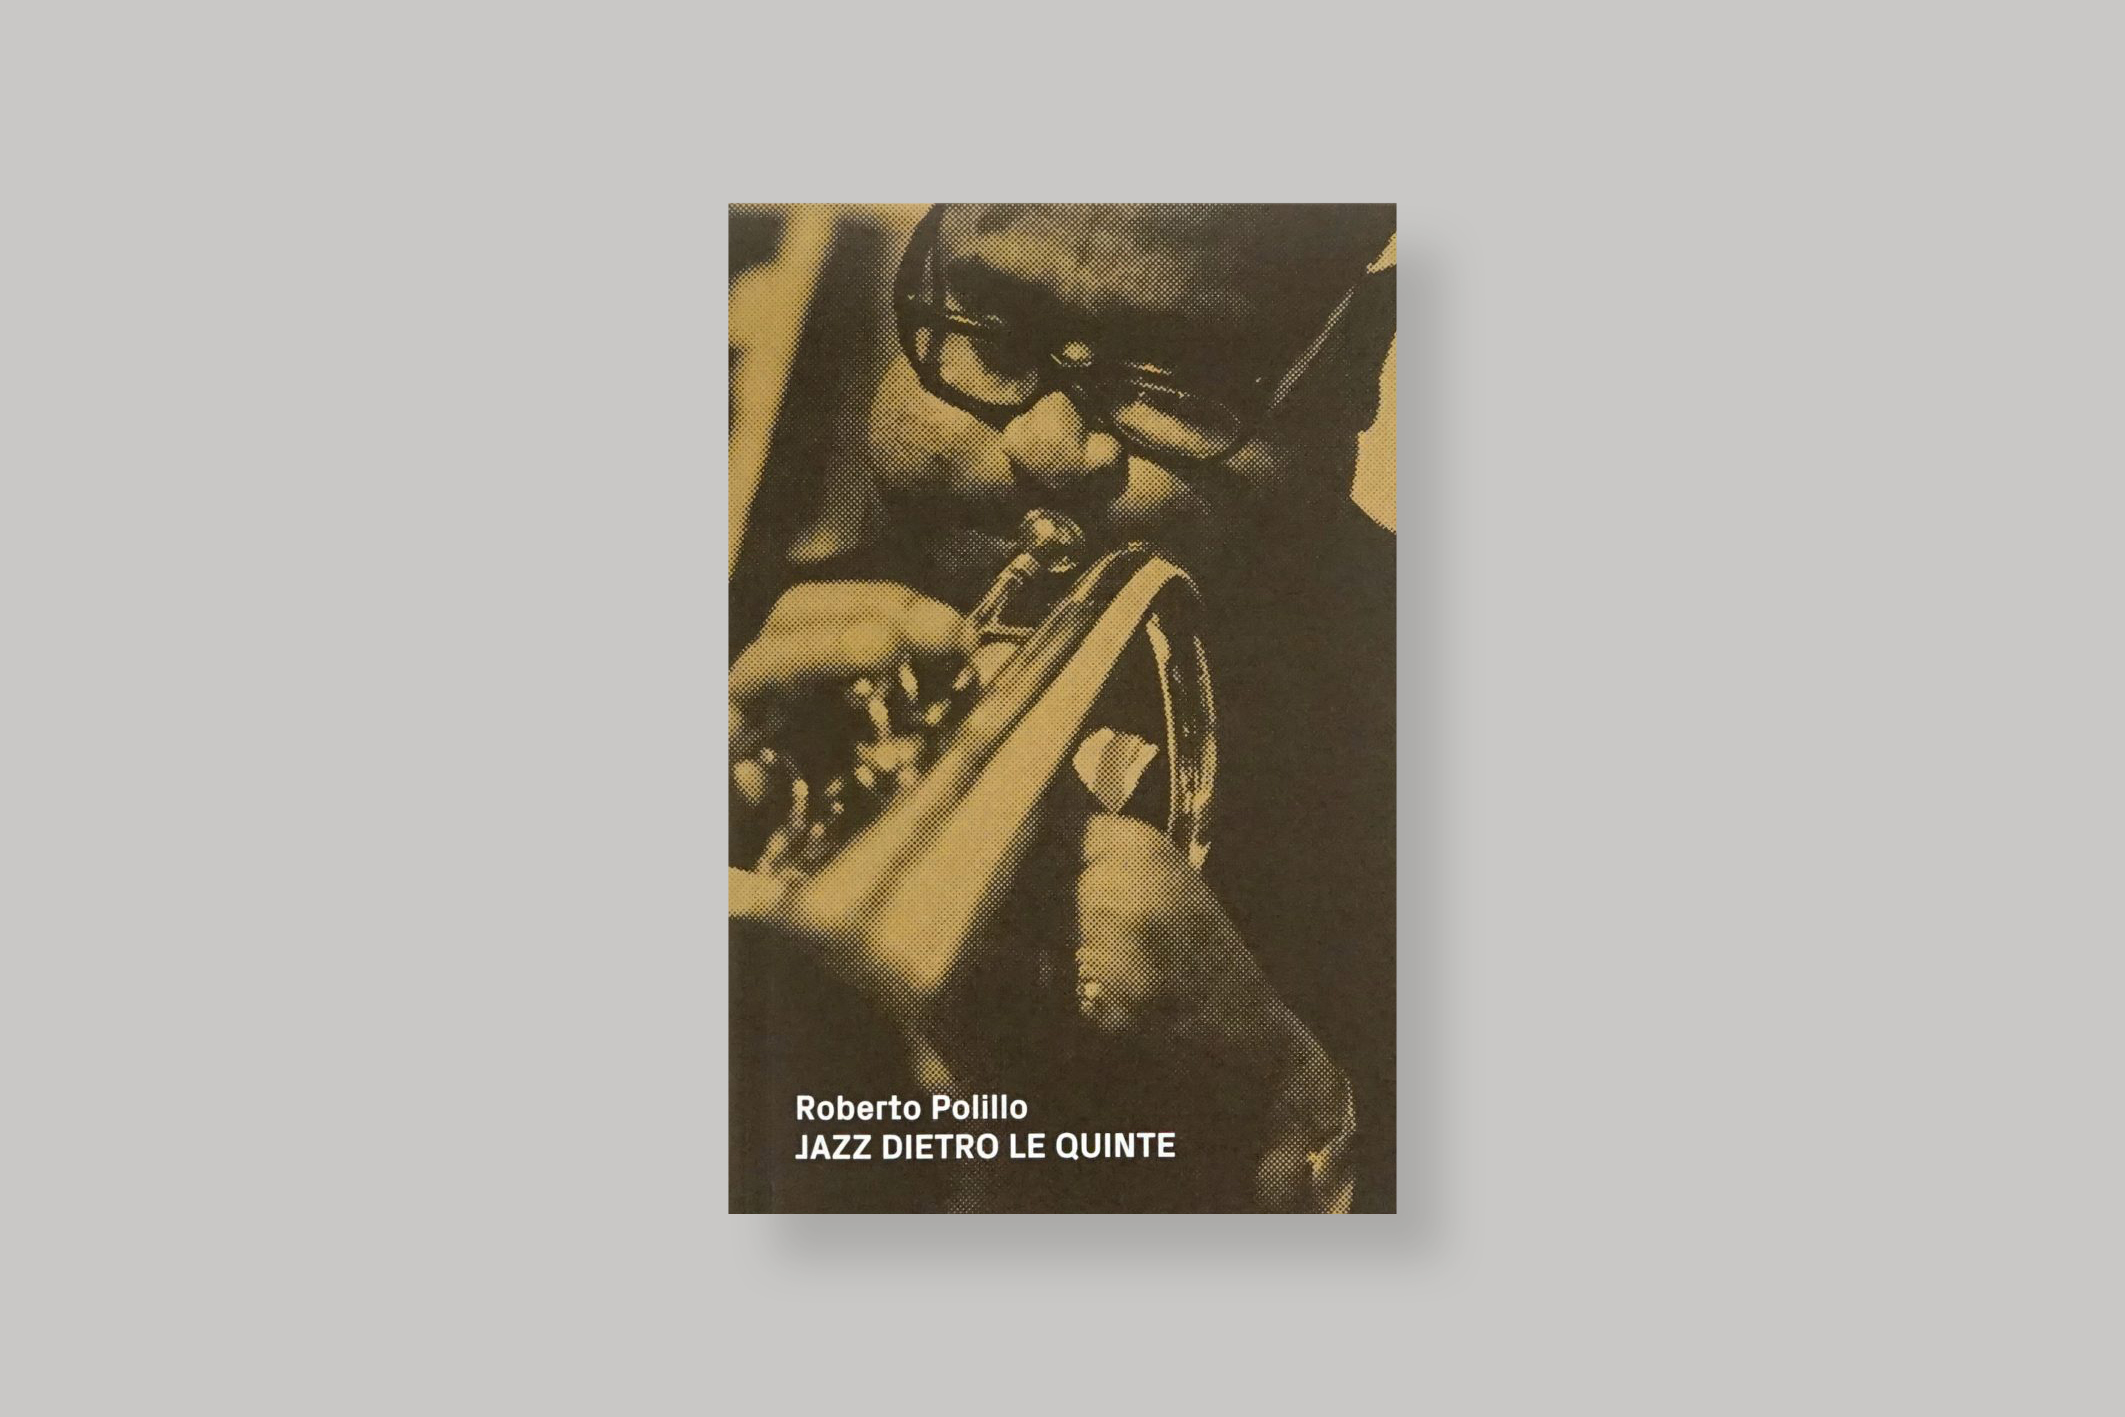 Jazz-dietro-Roberto-Polillo-mousse-publishing-cover